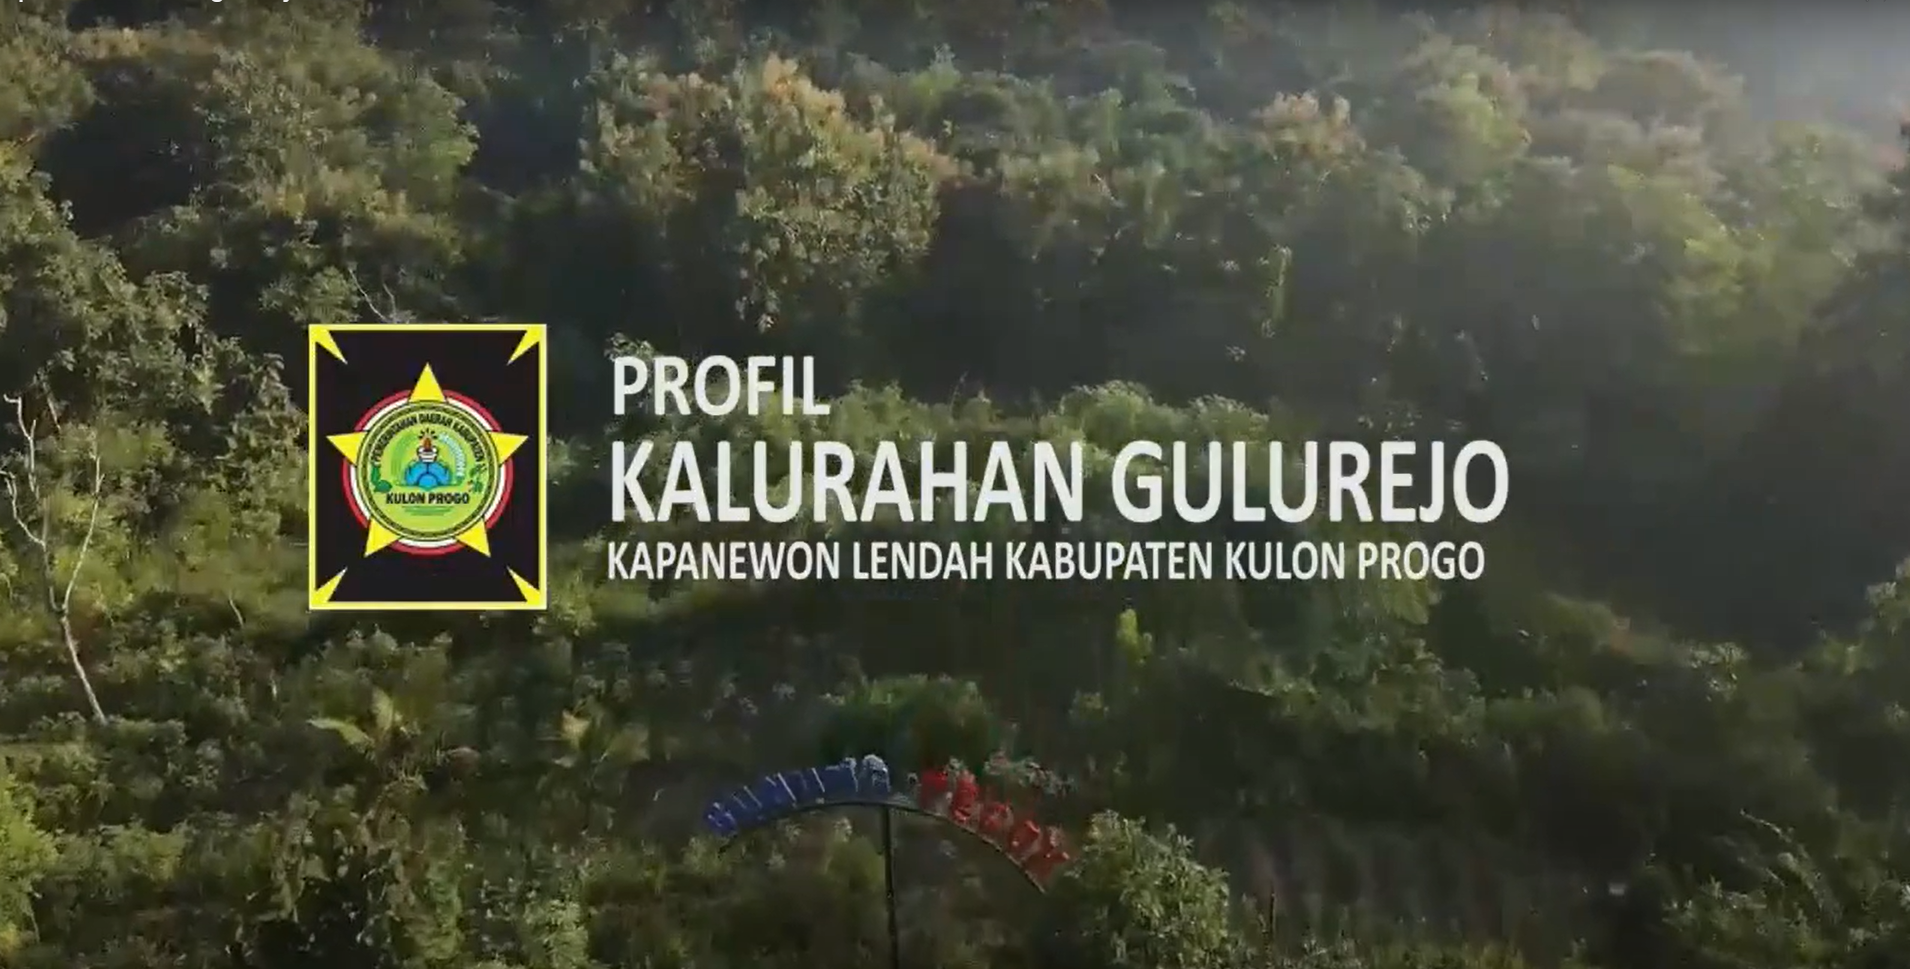 Profil Kalurahan Gulurejo Kapanewon Lendah